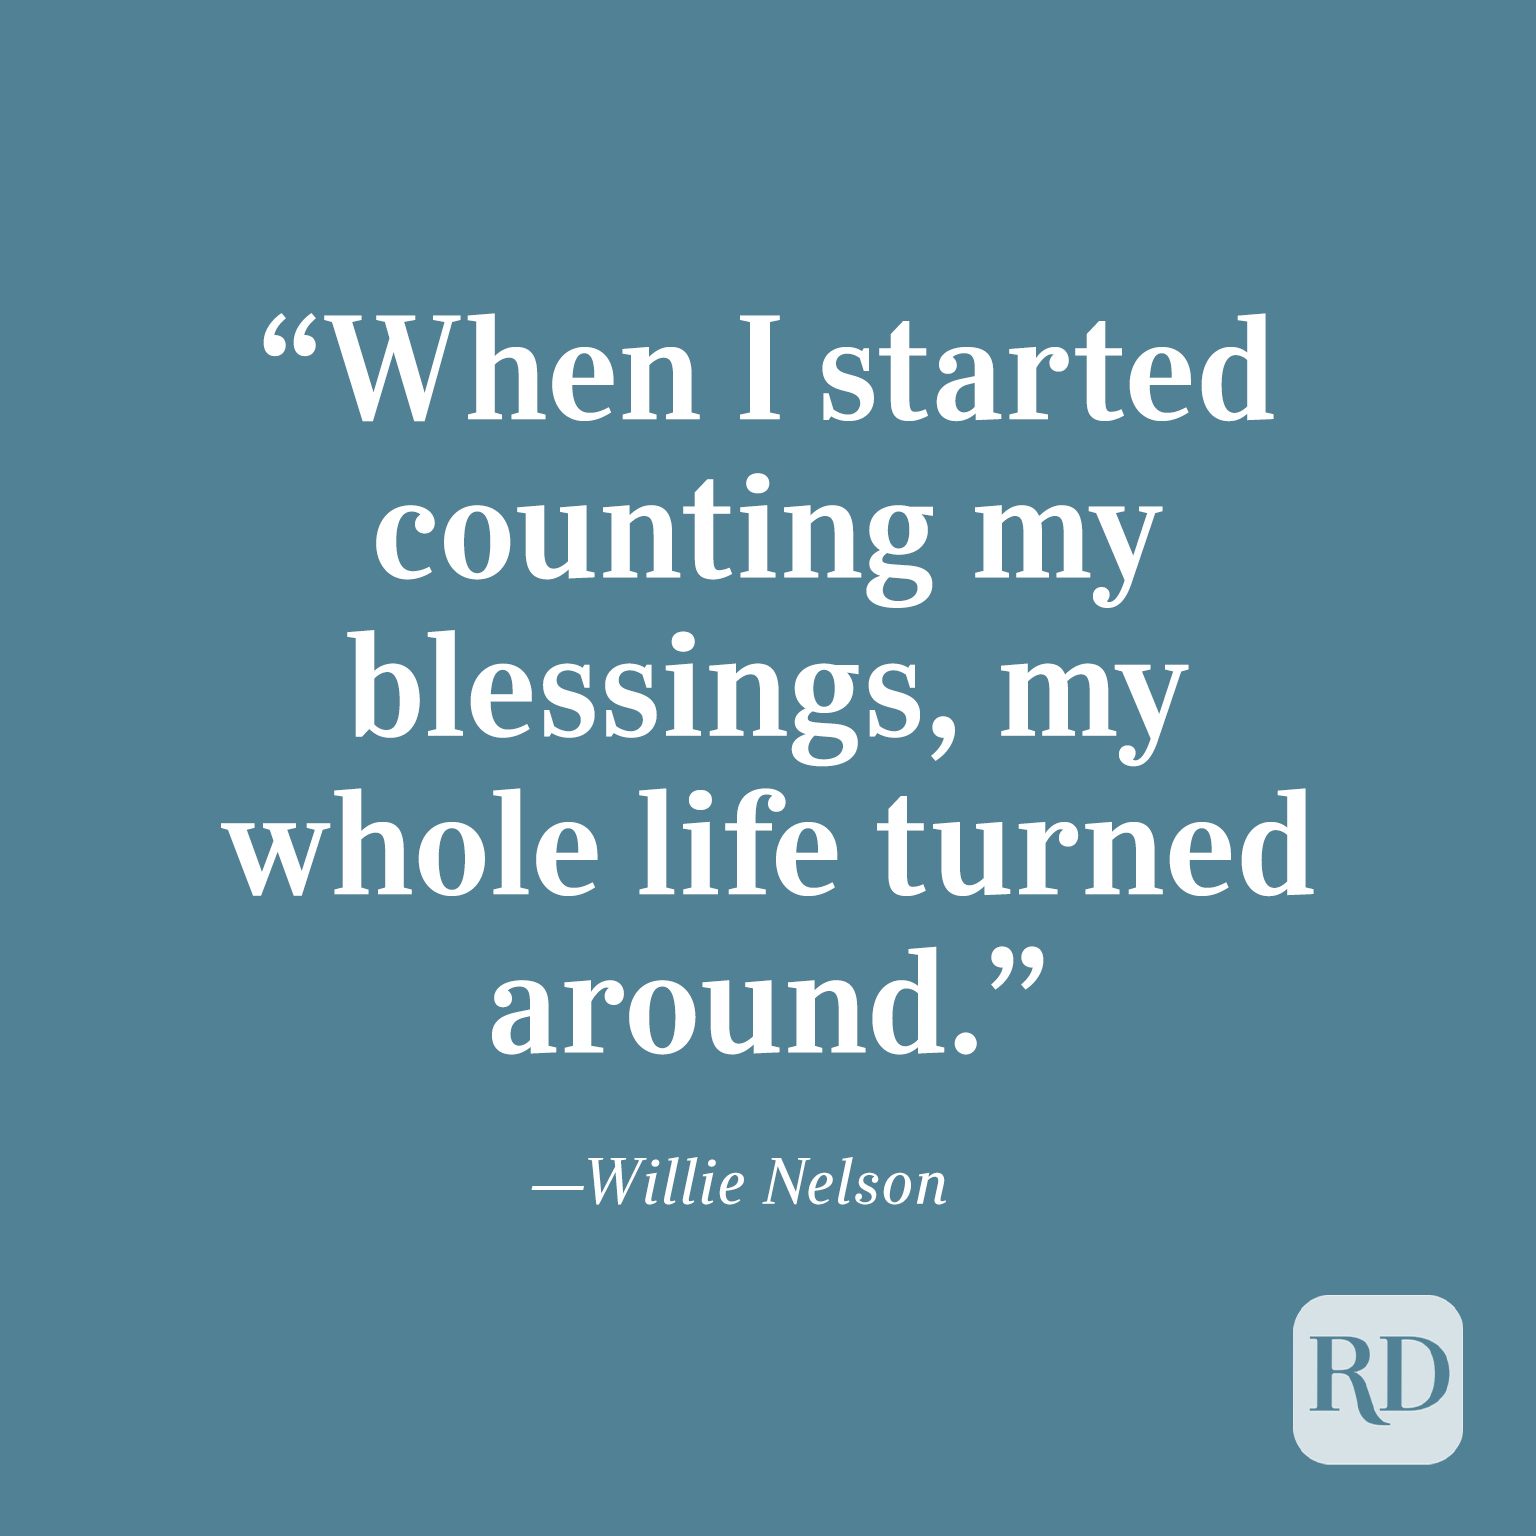 Willie Nelson Gratitude Quotes 15